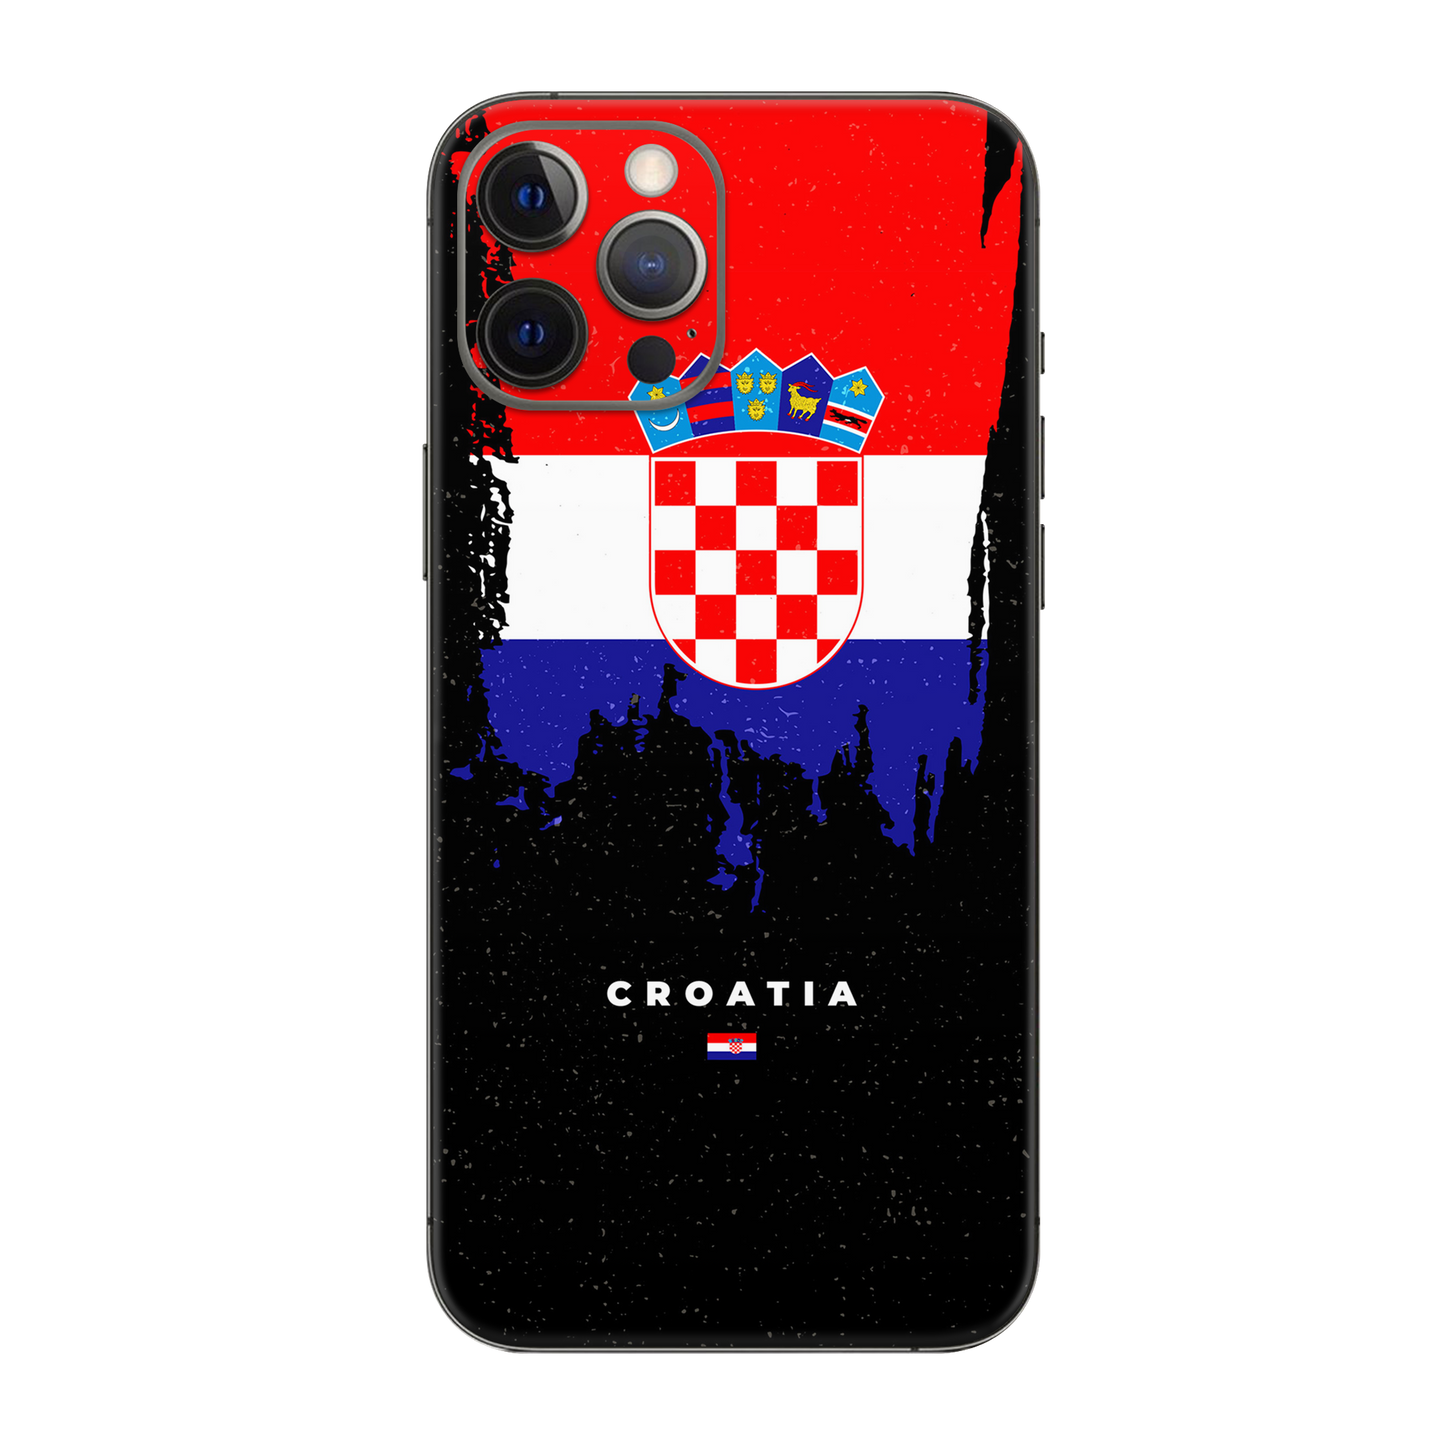 Backside Skin Kroatien - Für alle Smartphones bis 7 Zoll